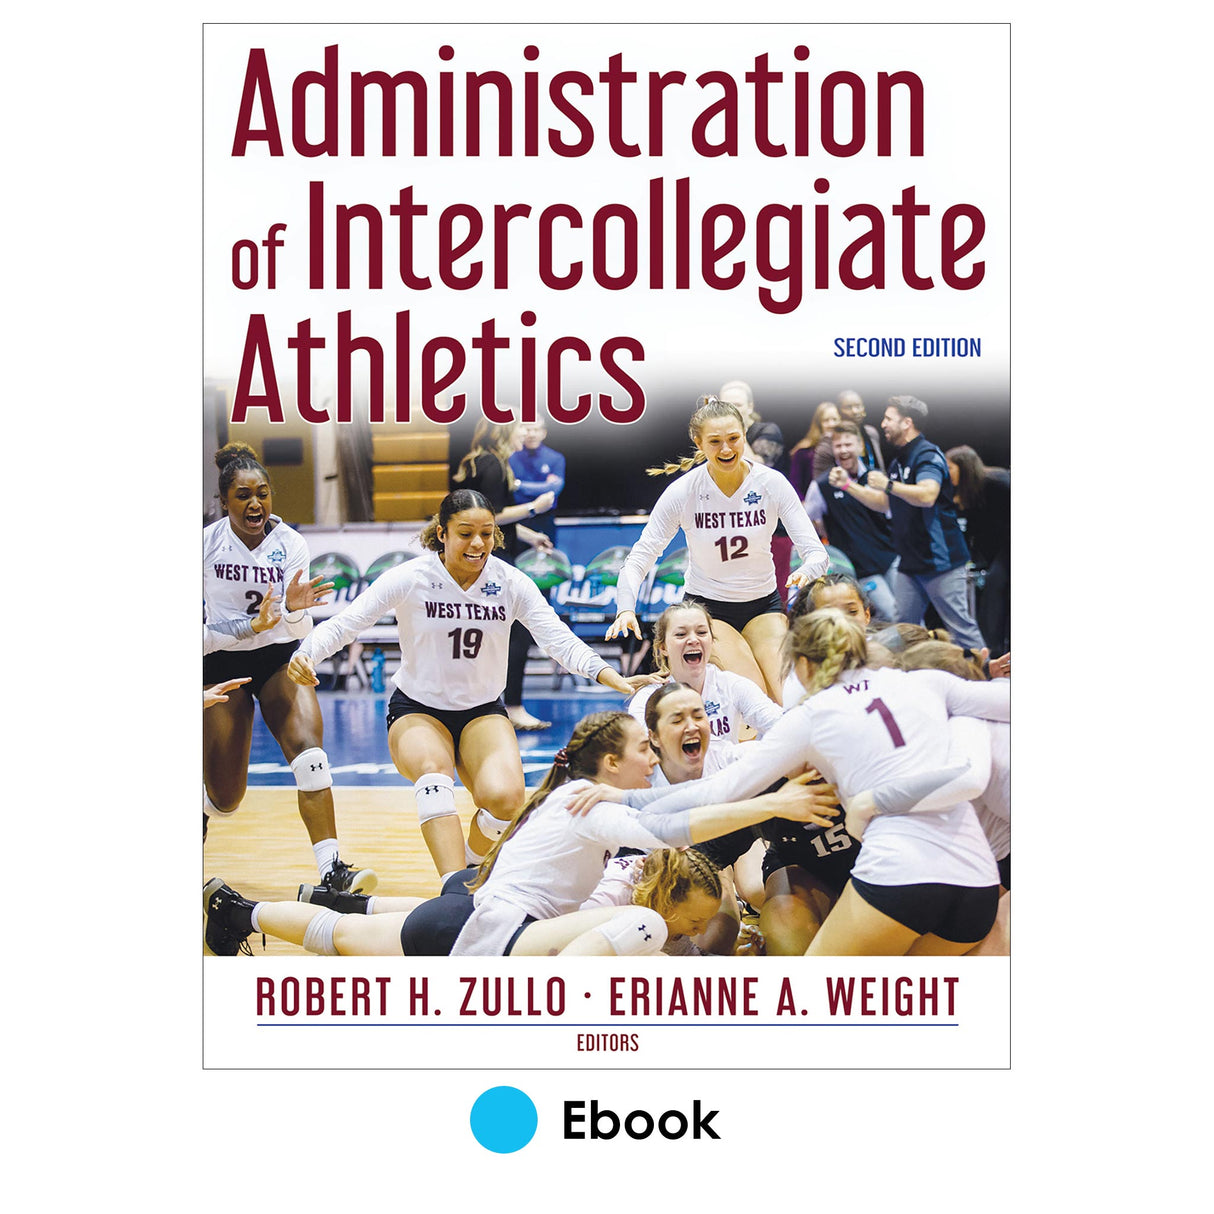 Administration of Intercollegiate Athletics 2nd Edition epub